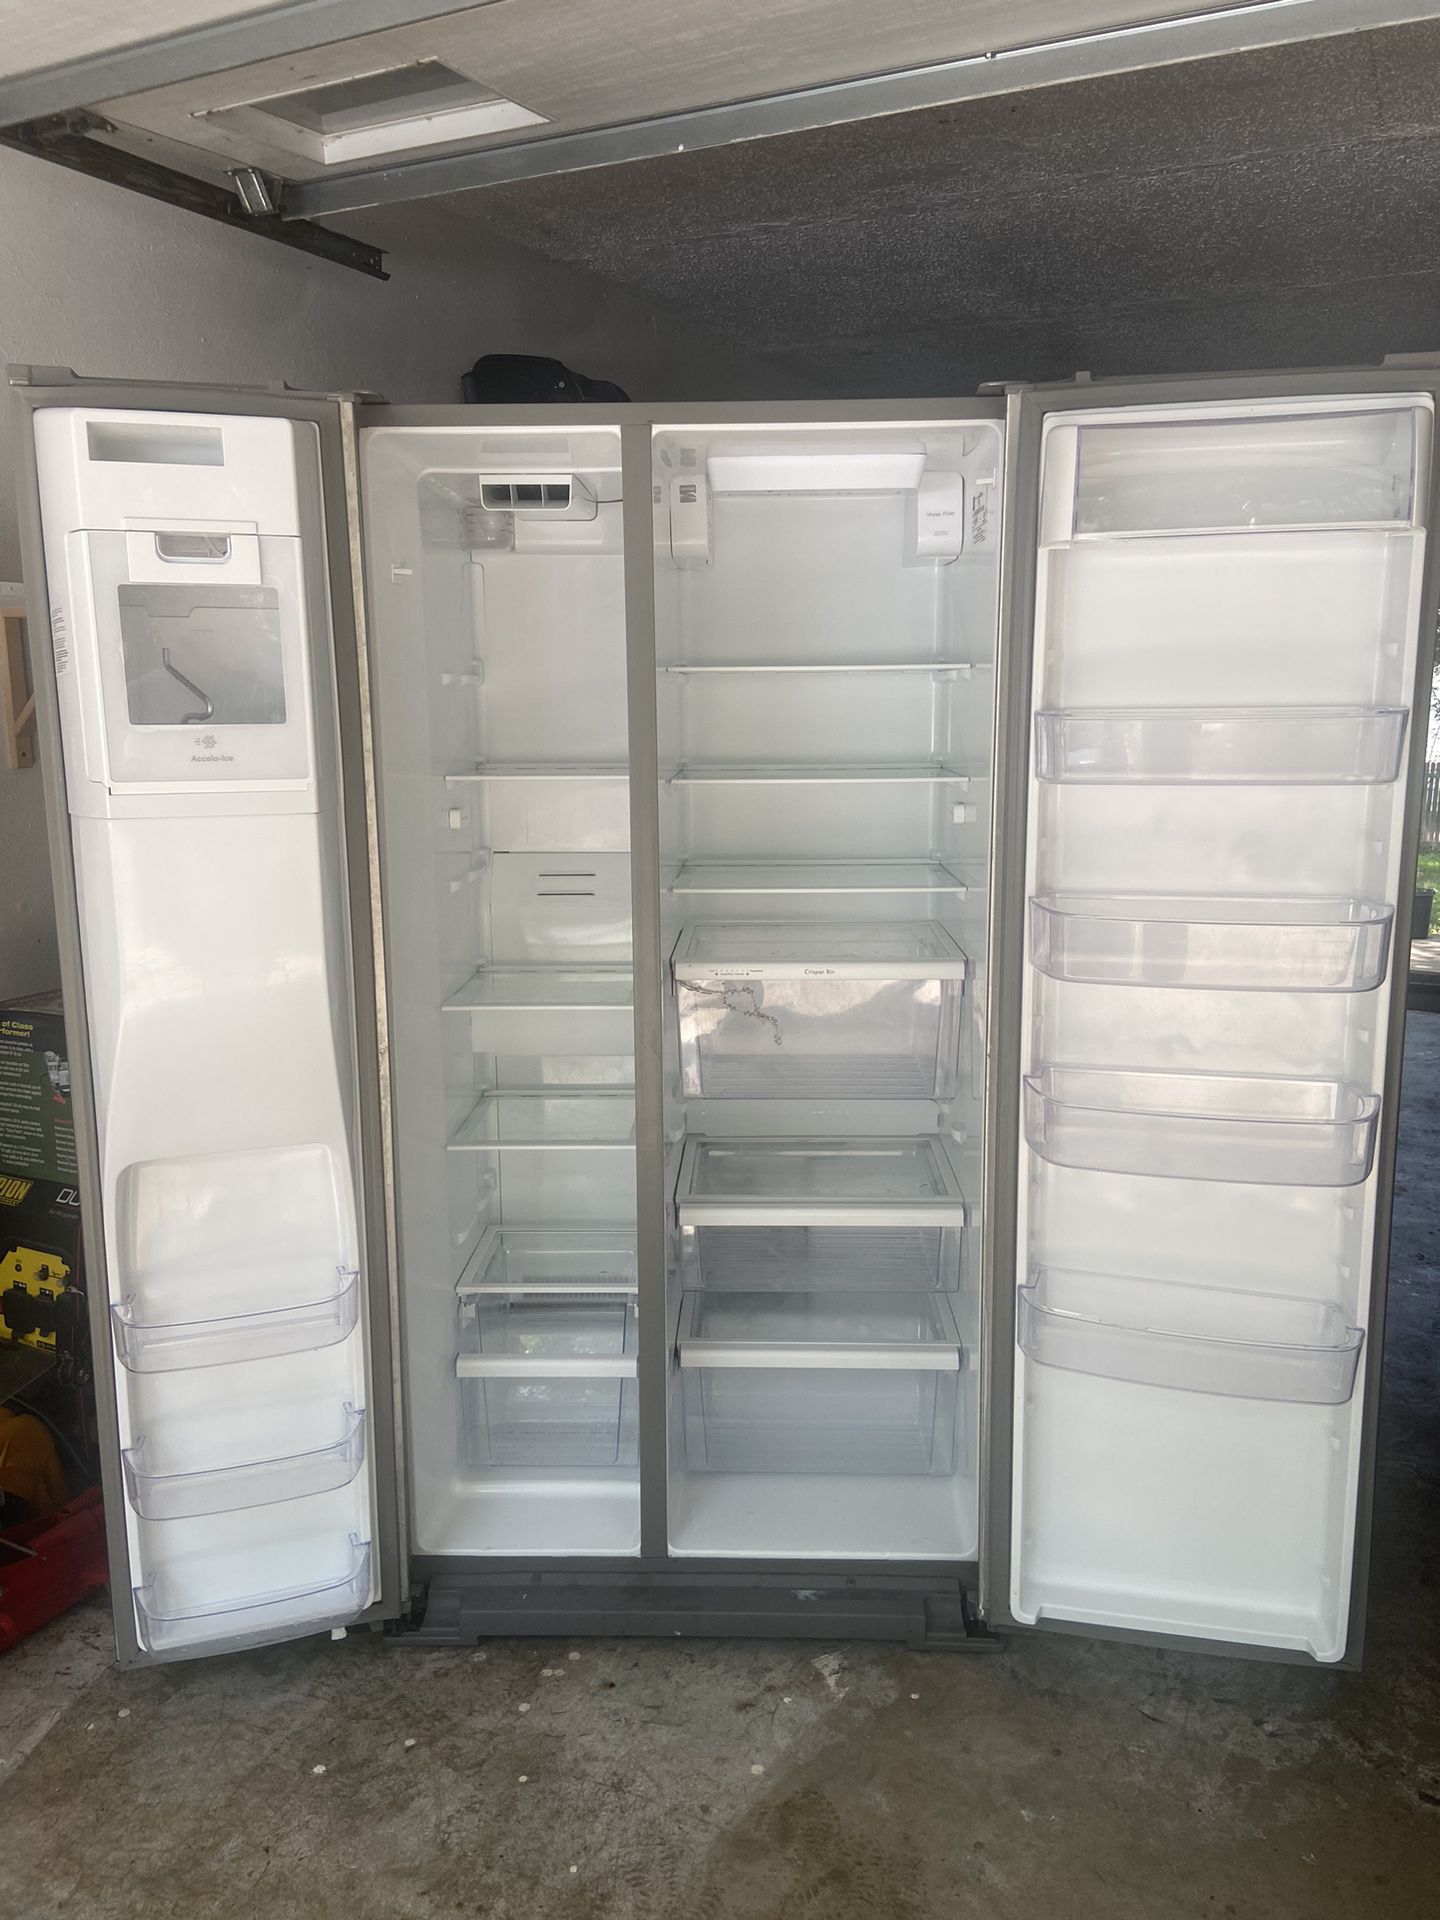 Kenmore Coldspot Refrigerator  - Side By Side